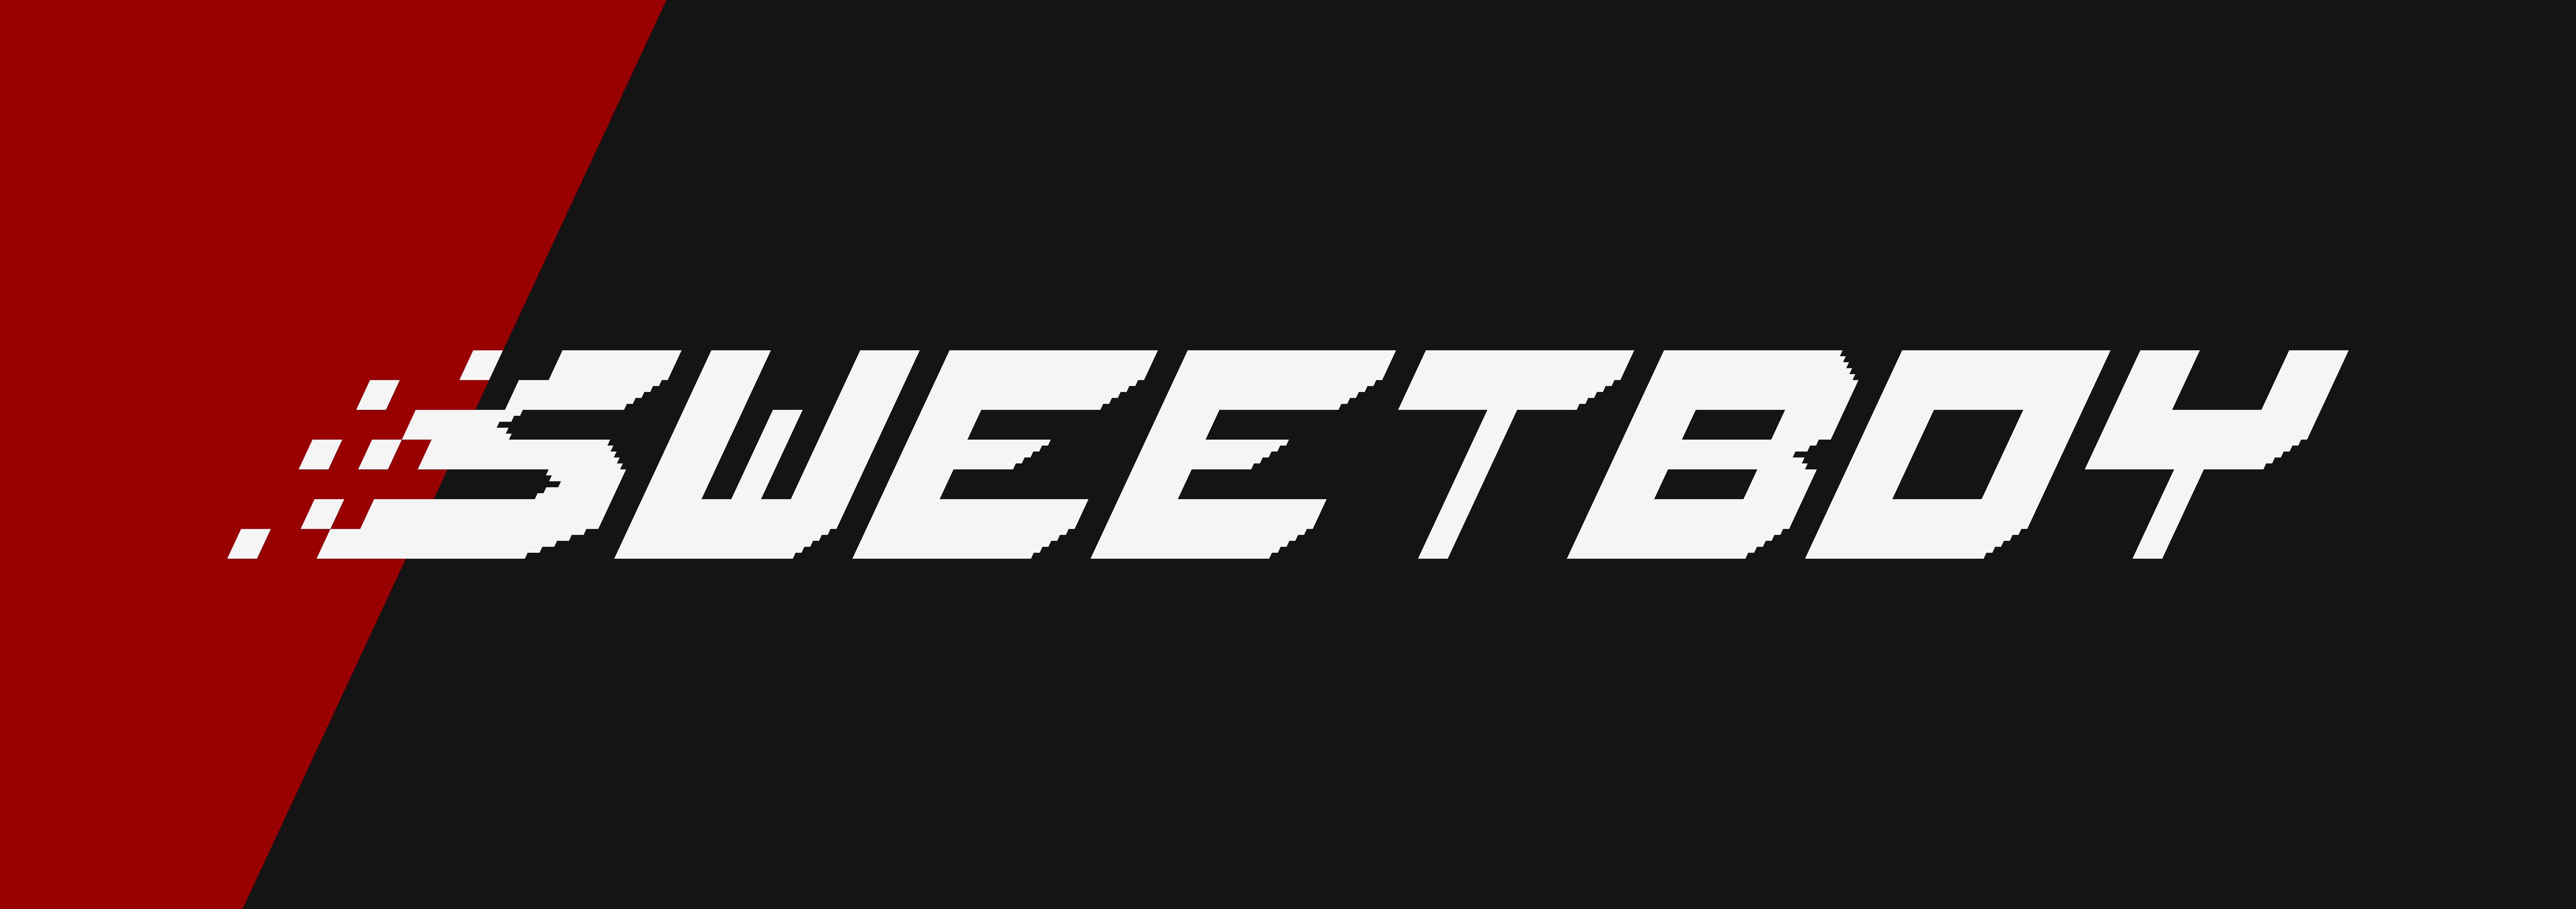 SweetBoy title logo